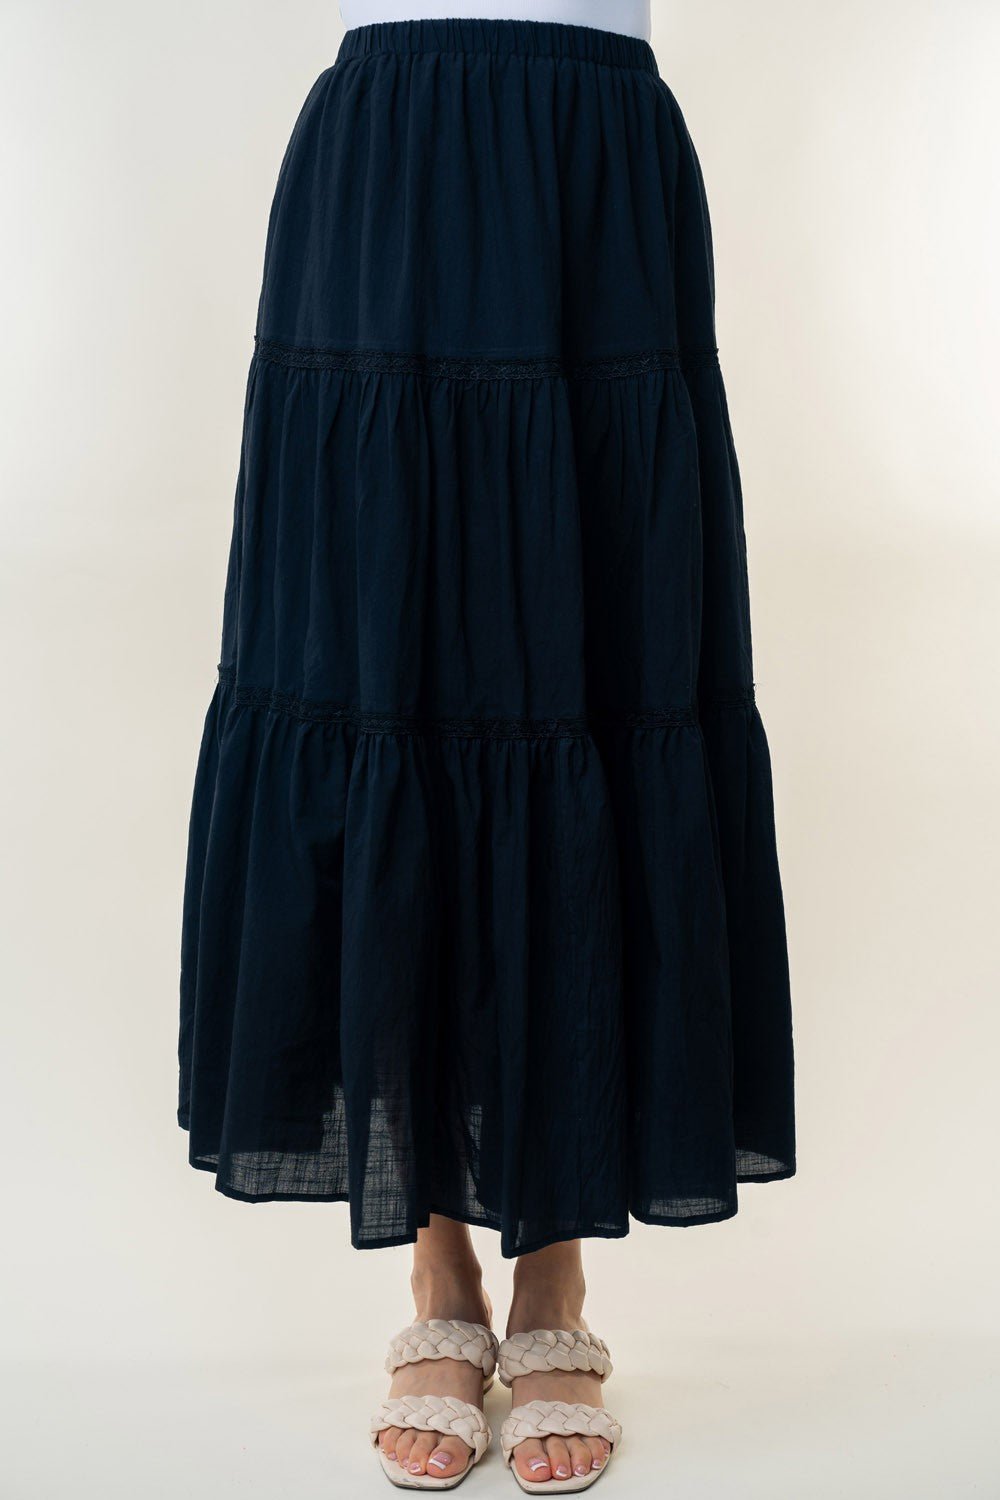 High Waisted Tiered Maxi Skirt in BlackMaxi SkirtWhite Birch